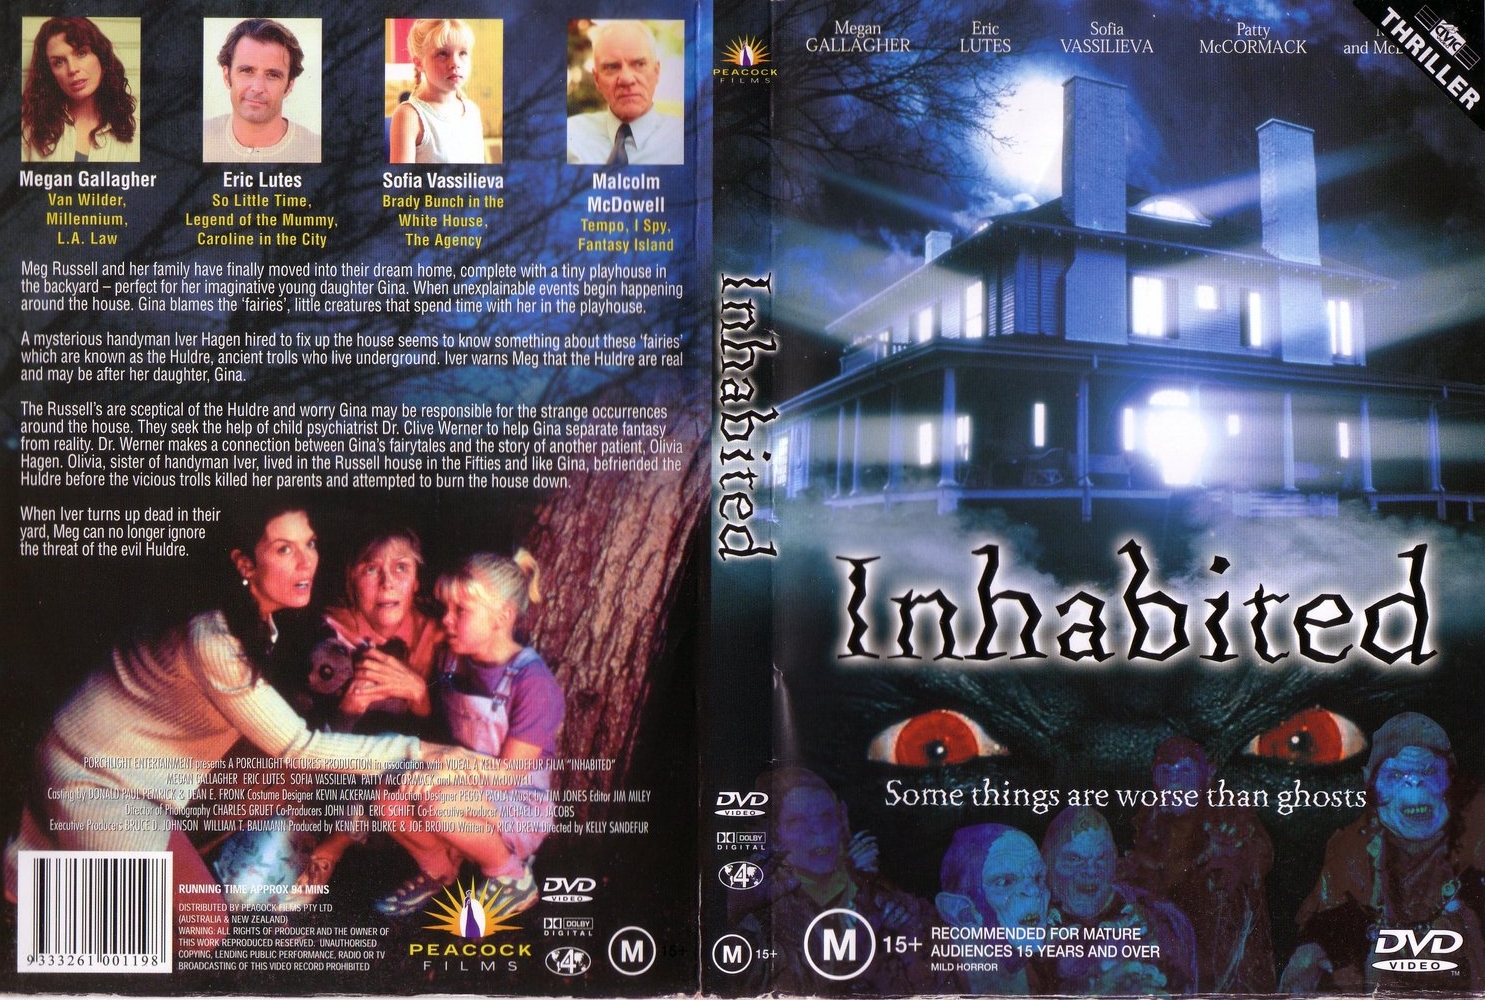 Jaquette DVD Inhabited